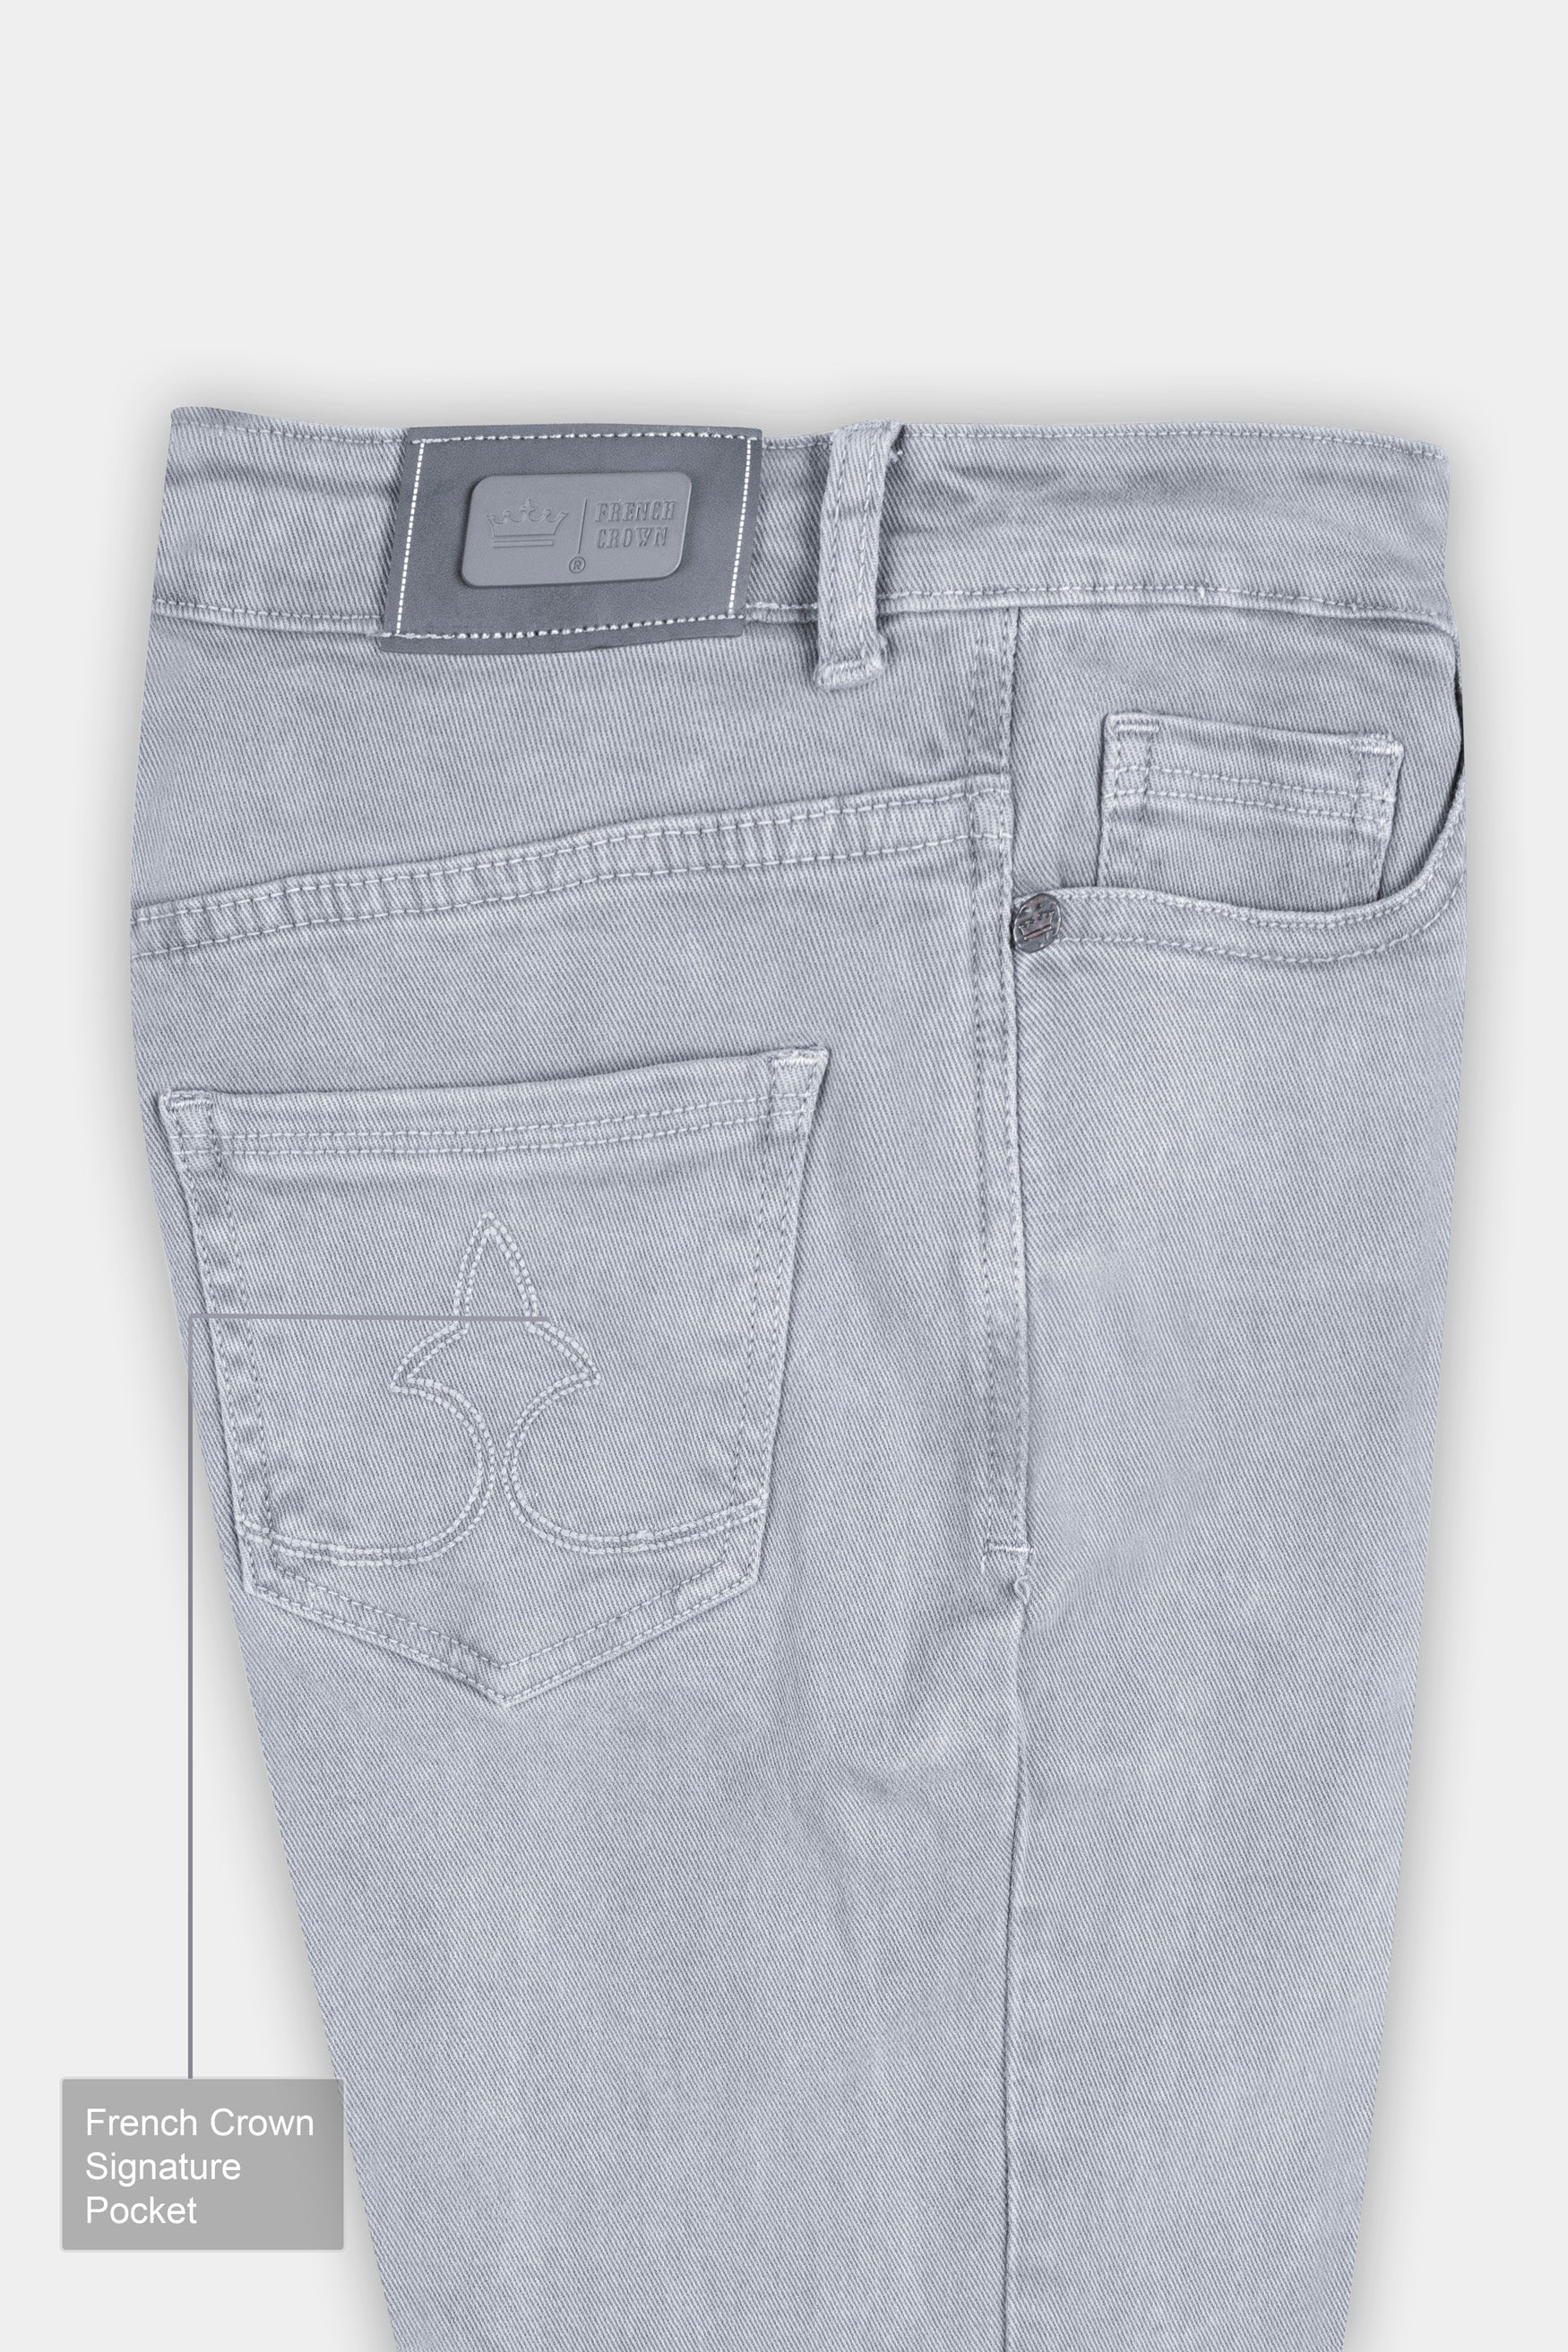 Glkaend Women's Baggy Jeans High Waisted Distressed Denim Pants Y2k  Boyfriend Tassel Bootcut Jeans,Blue,S at Amazon Women's Clothing store